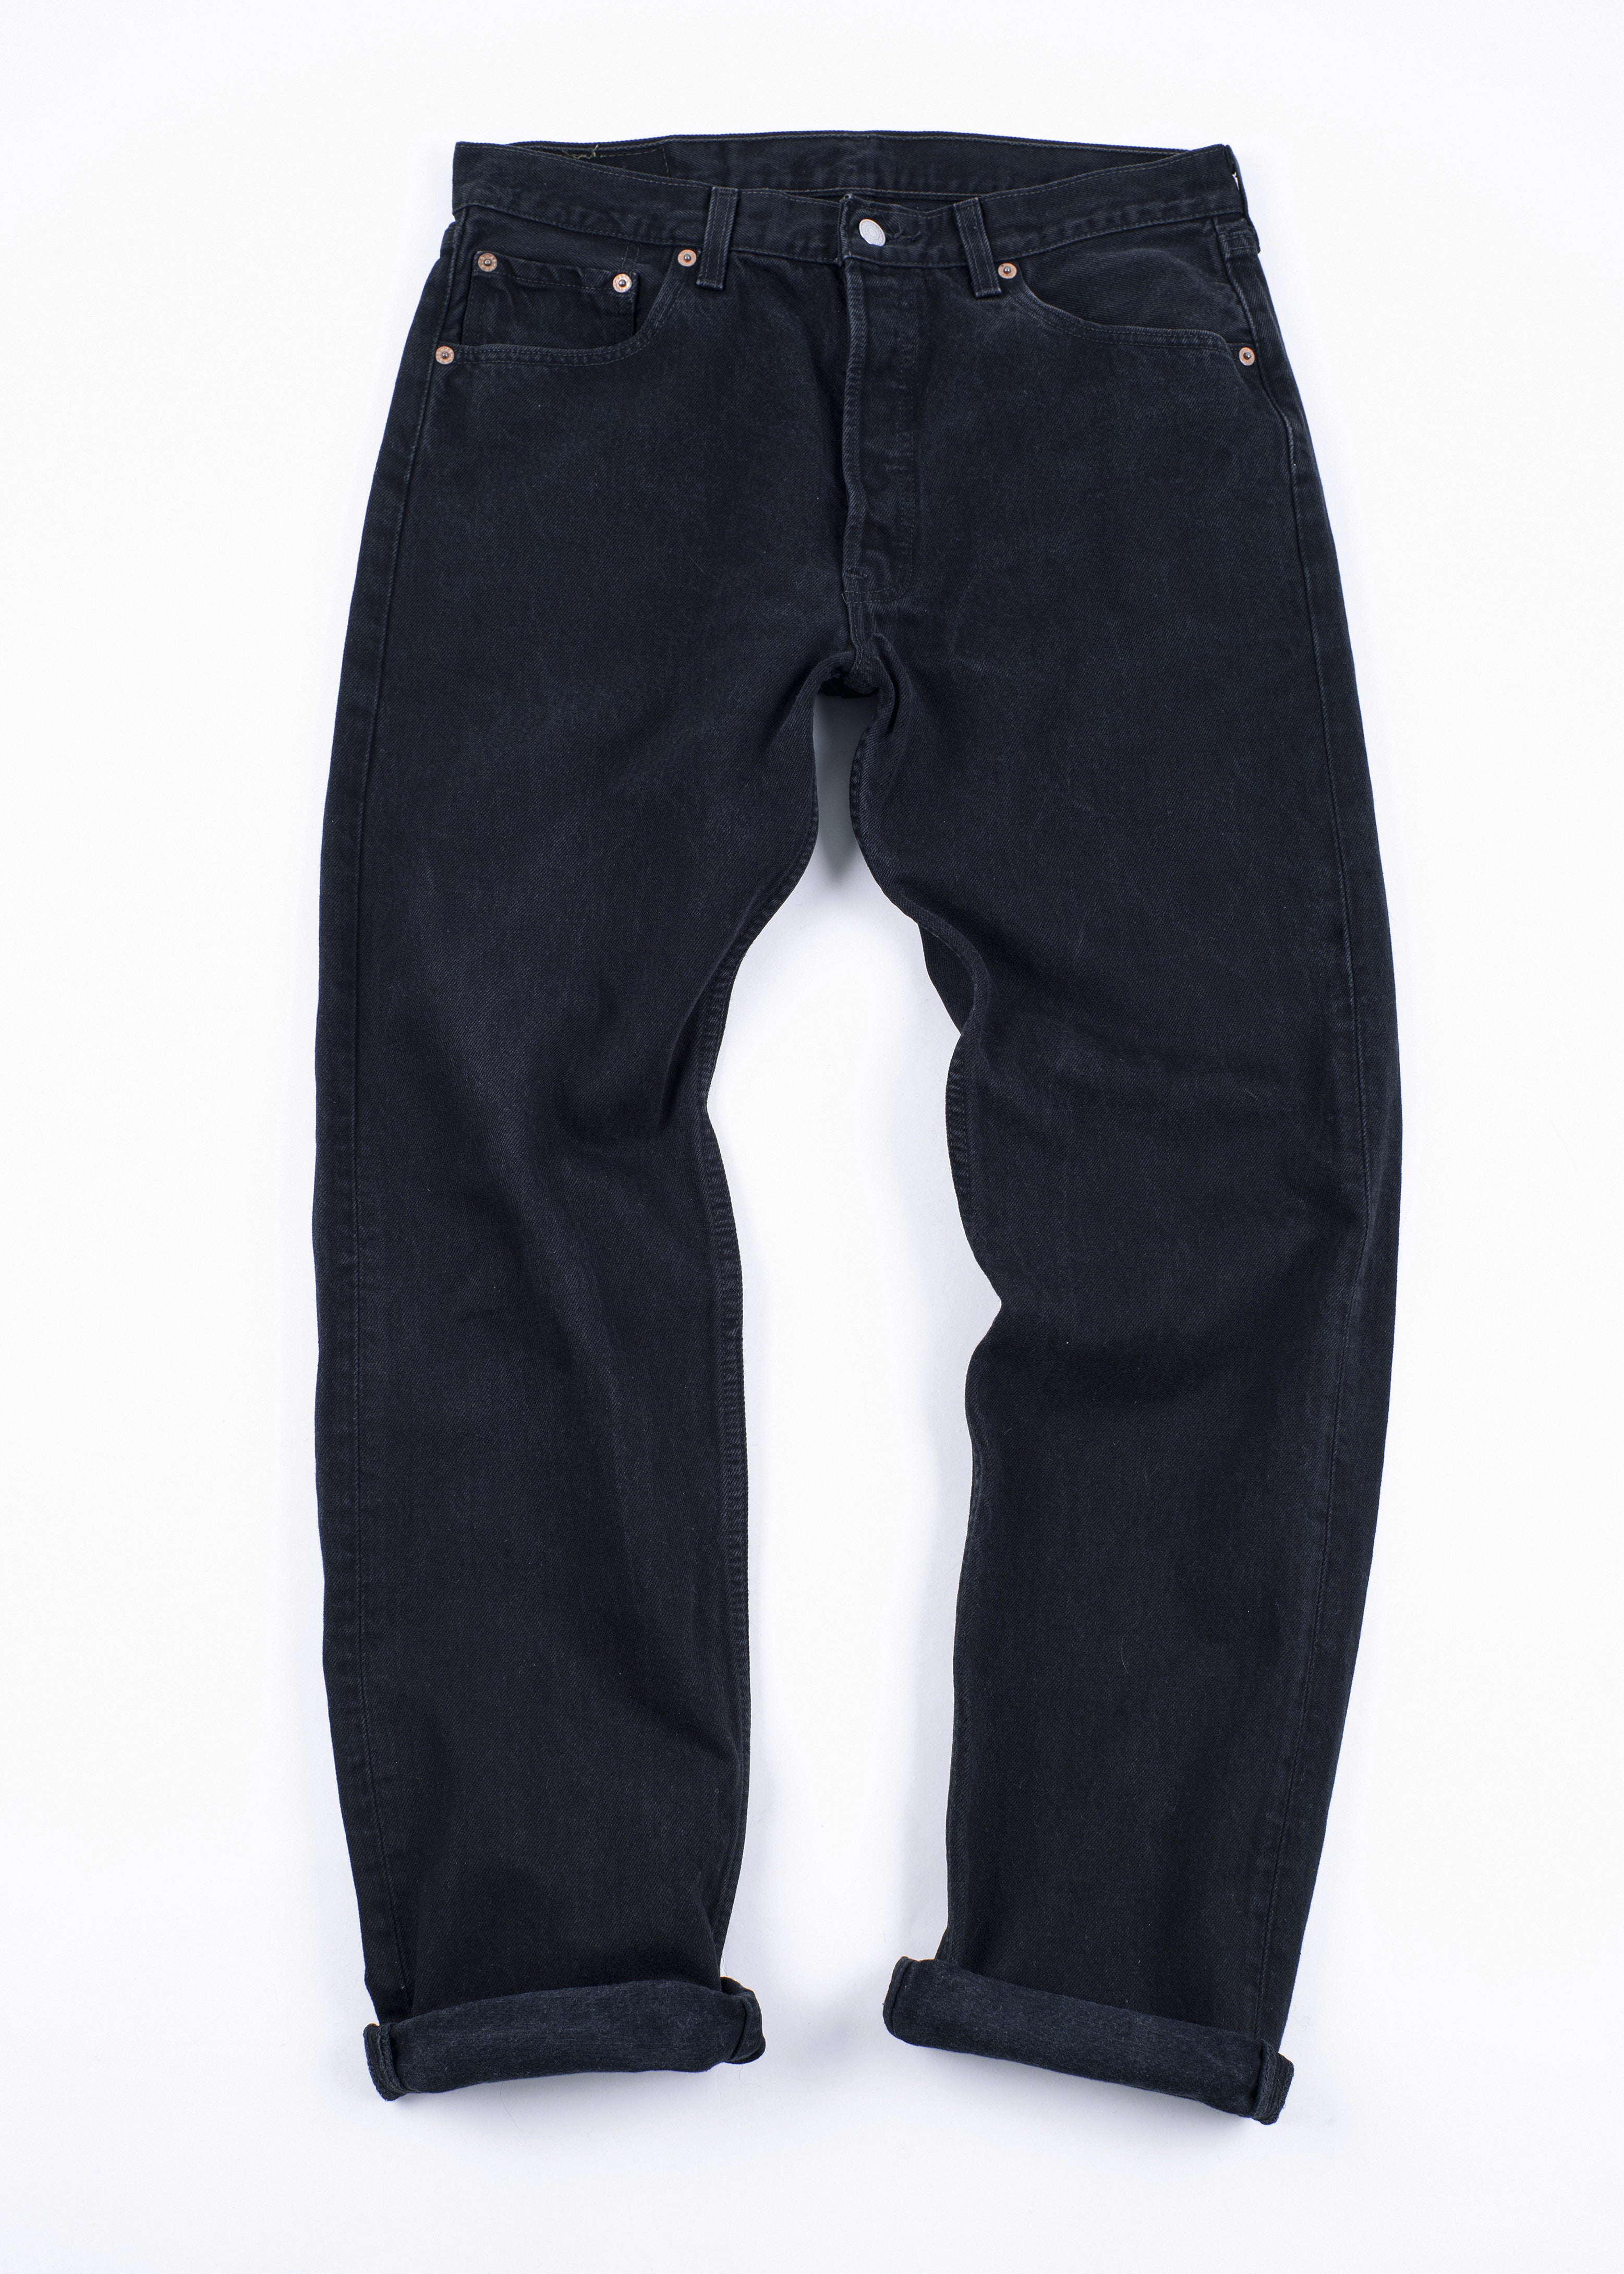 Levi's 501 Men's Vintage Black Jeans Made in USA, W34/L32